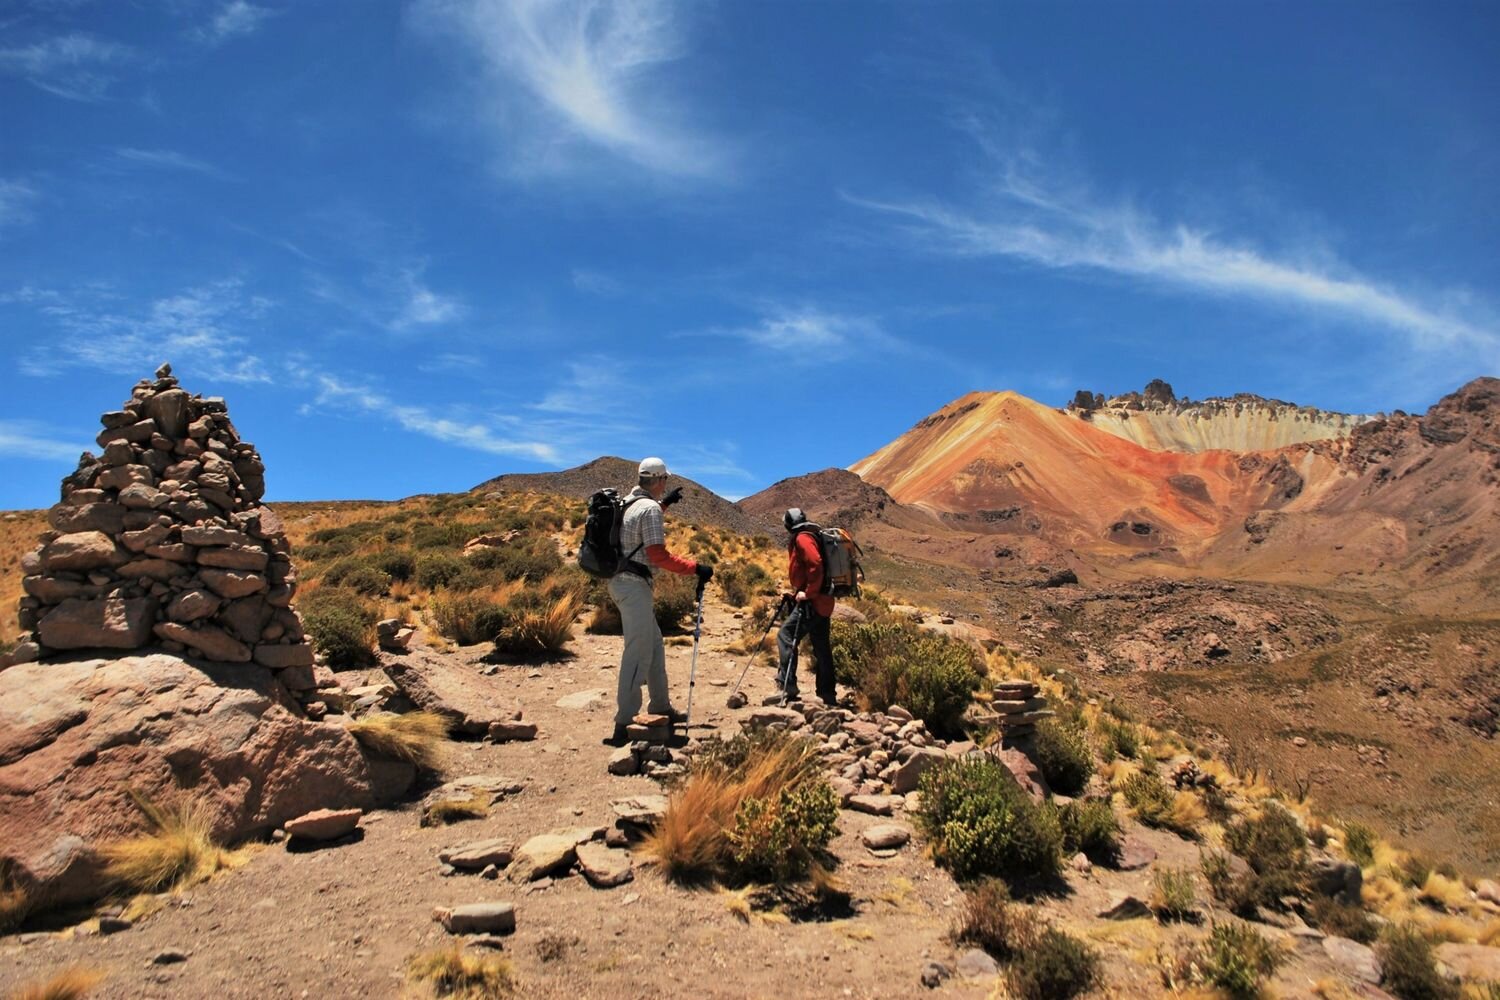  Acclimatizing hike at the slopes of the Tunupa volcano 